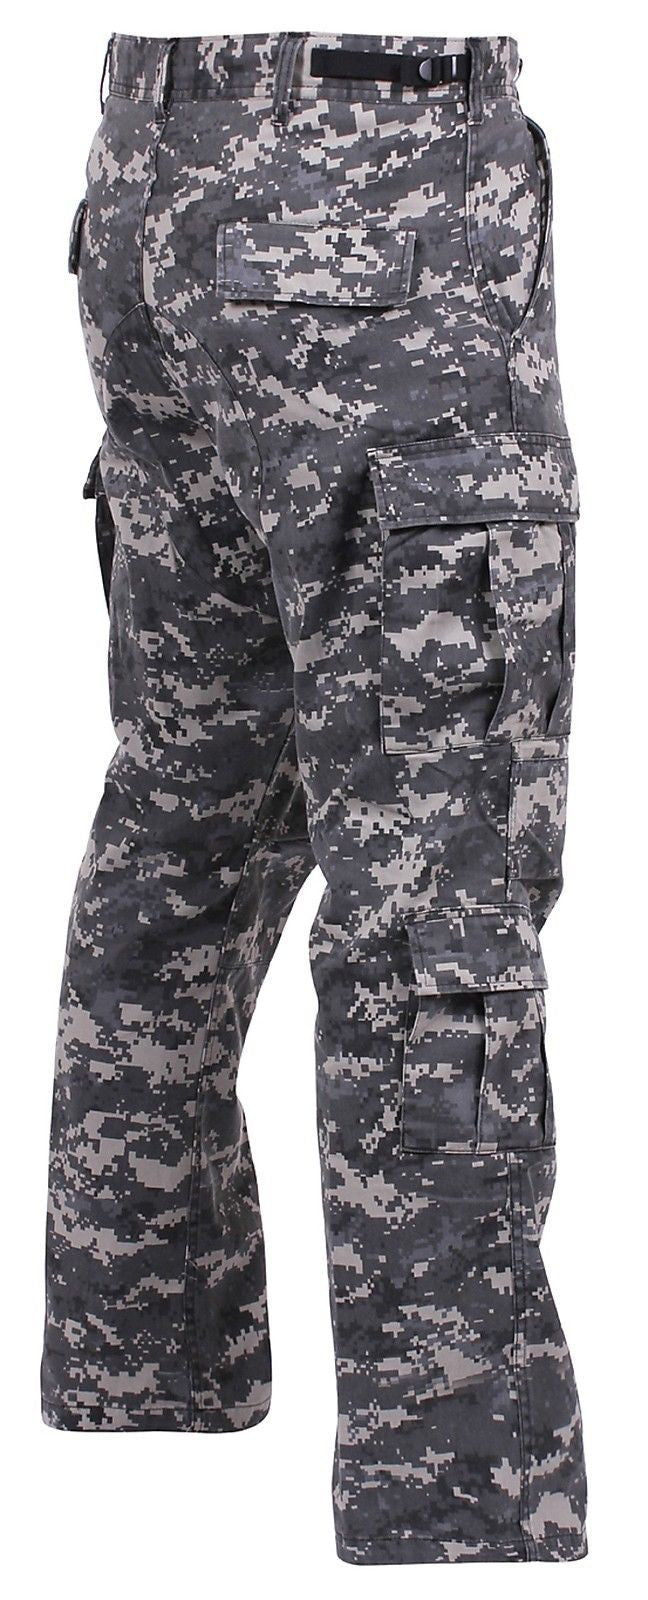 Men's Subdued Urban Digital Camouflage Fatigue Cargo Pants